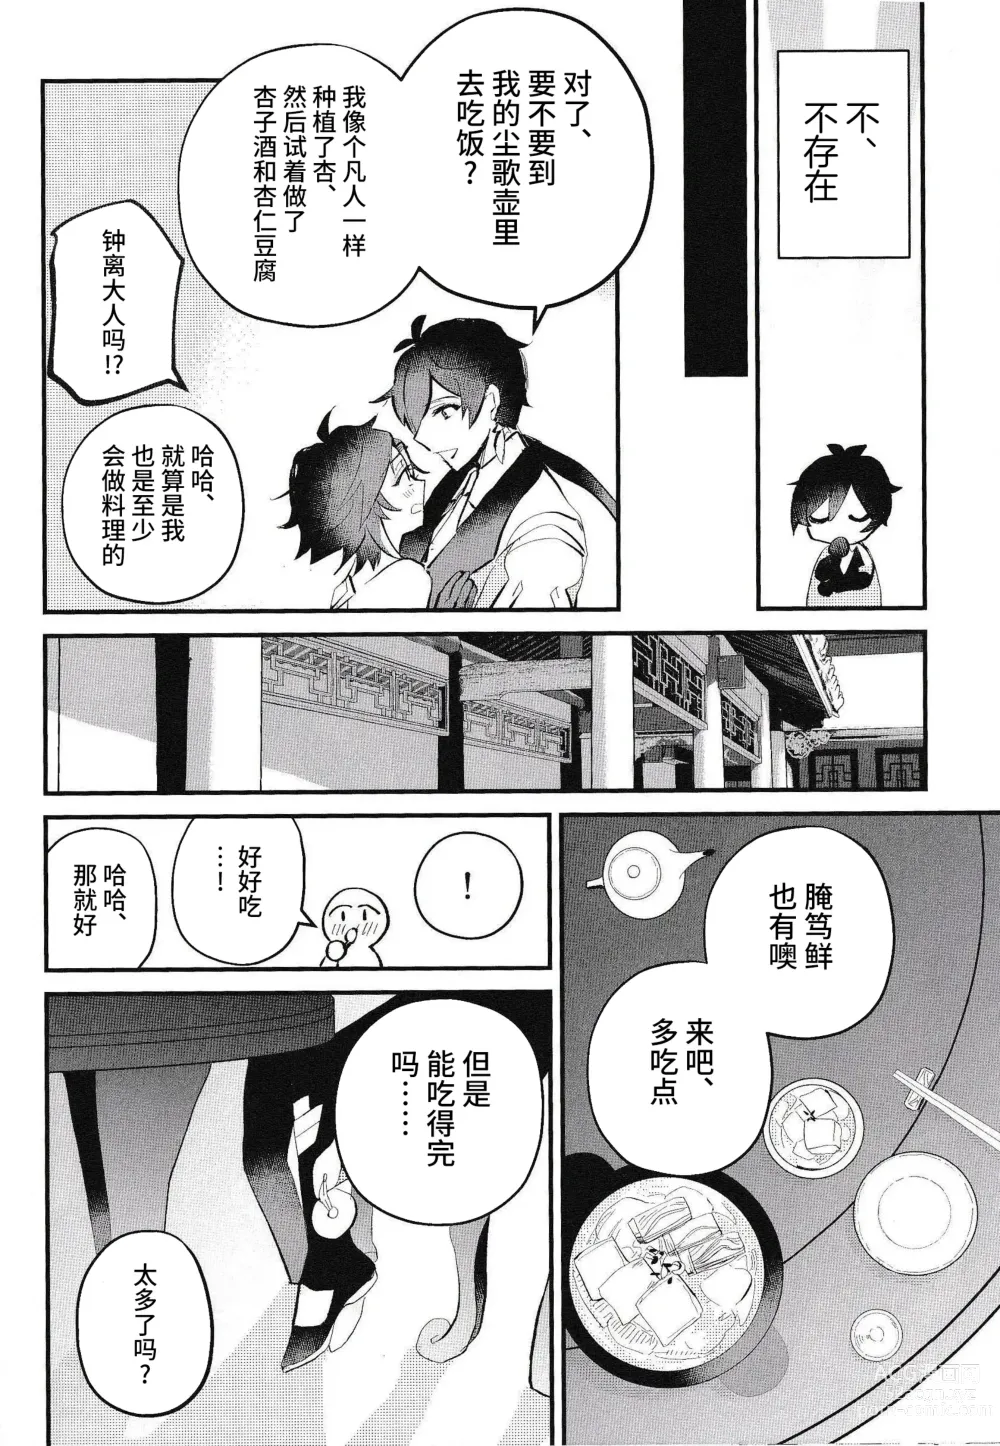 Page 8 of doujinshi Setsugetsuka Tomo ni - share a snow, moon, and flowers